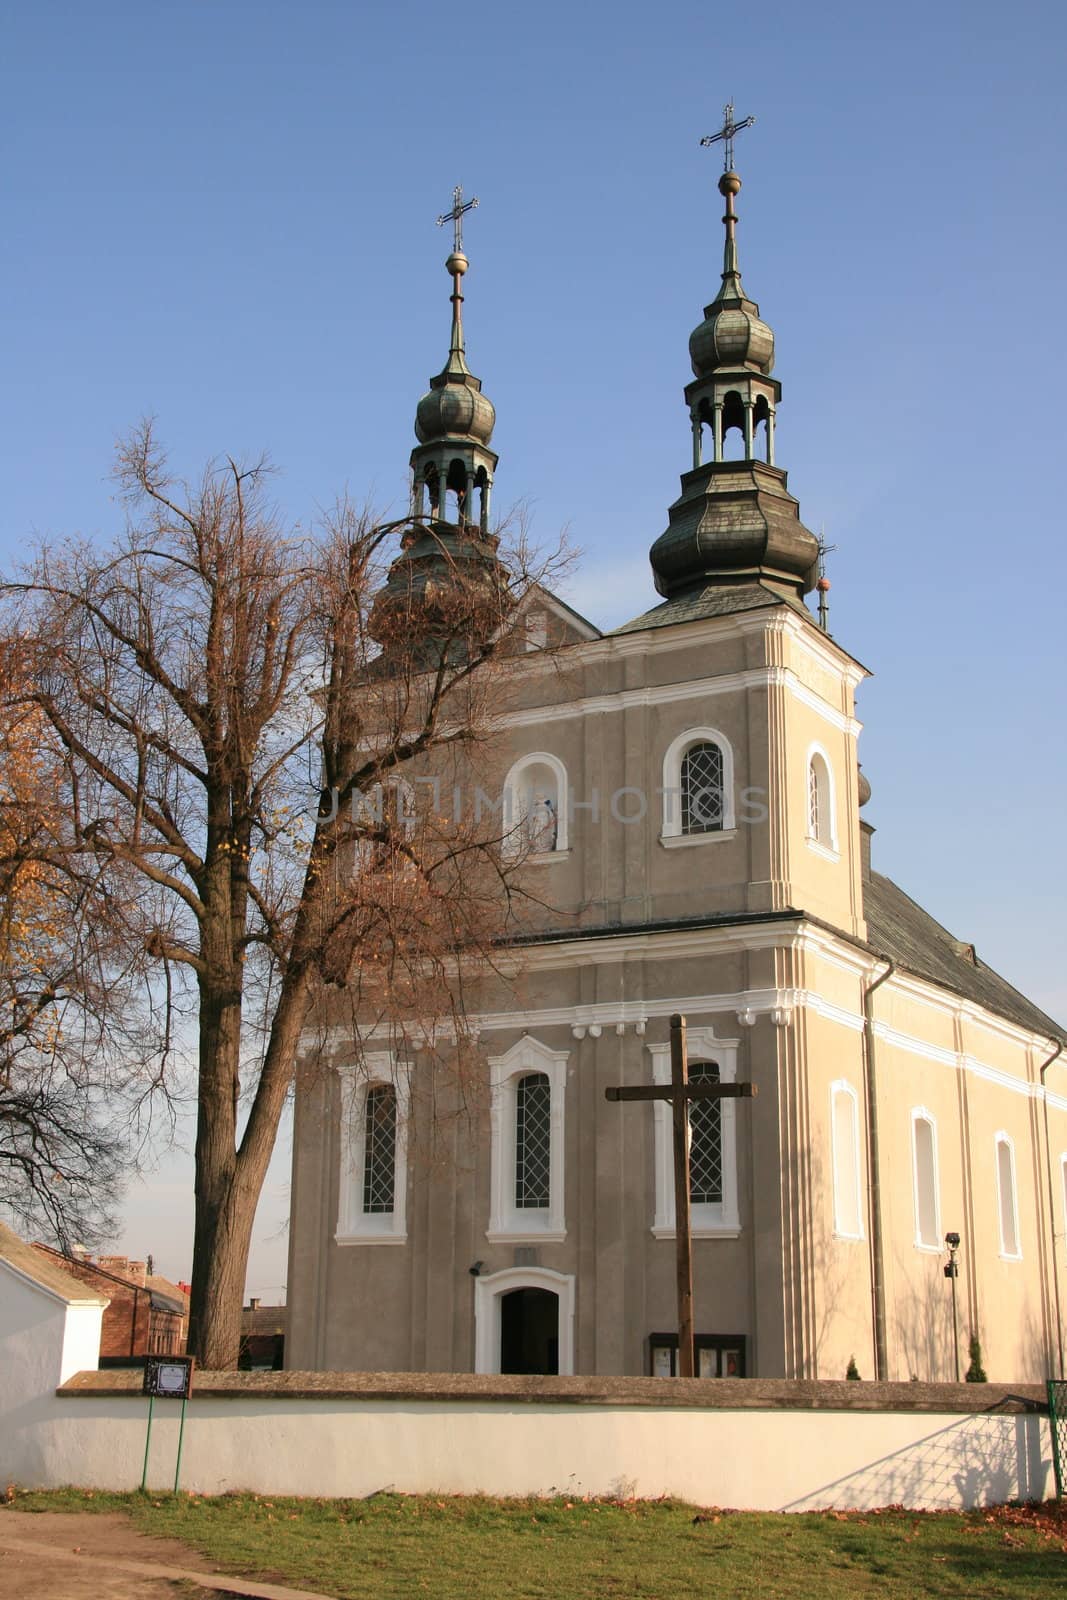 church by zbyniek123